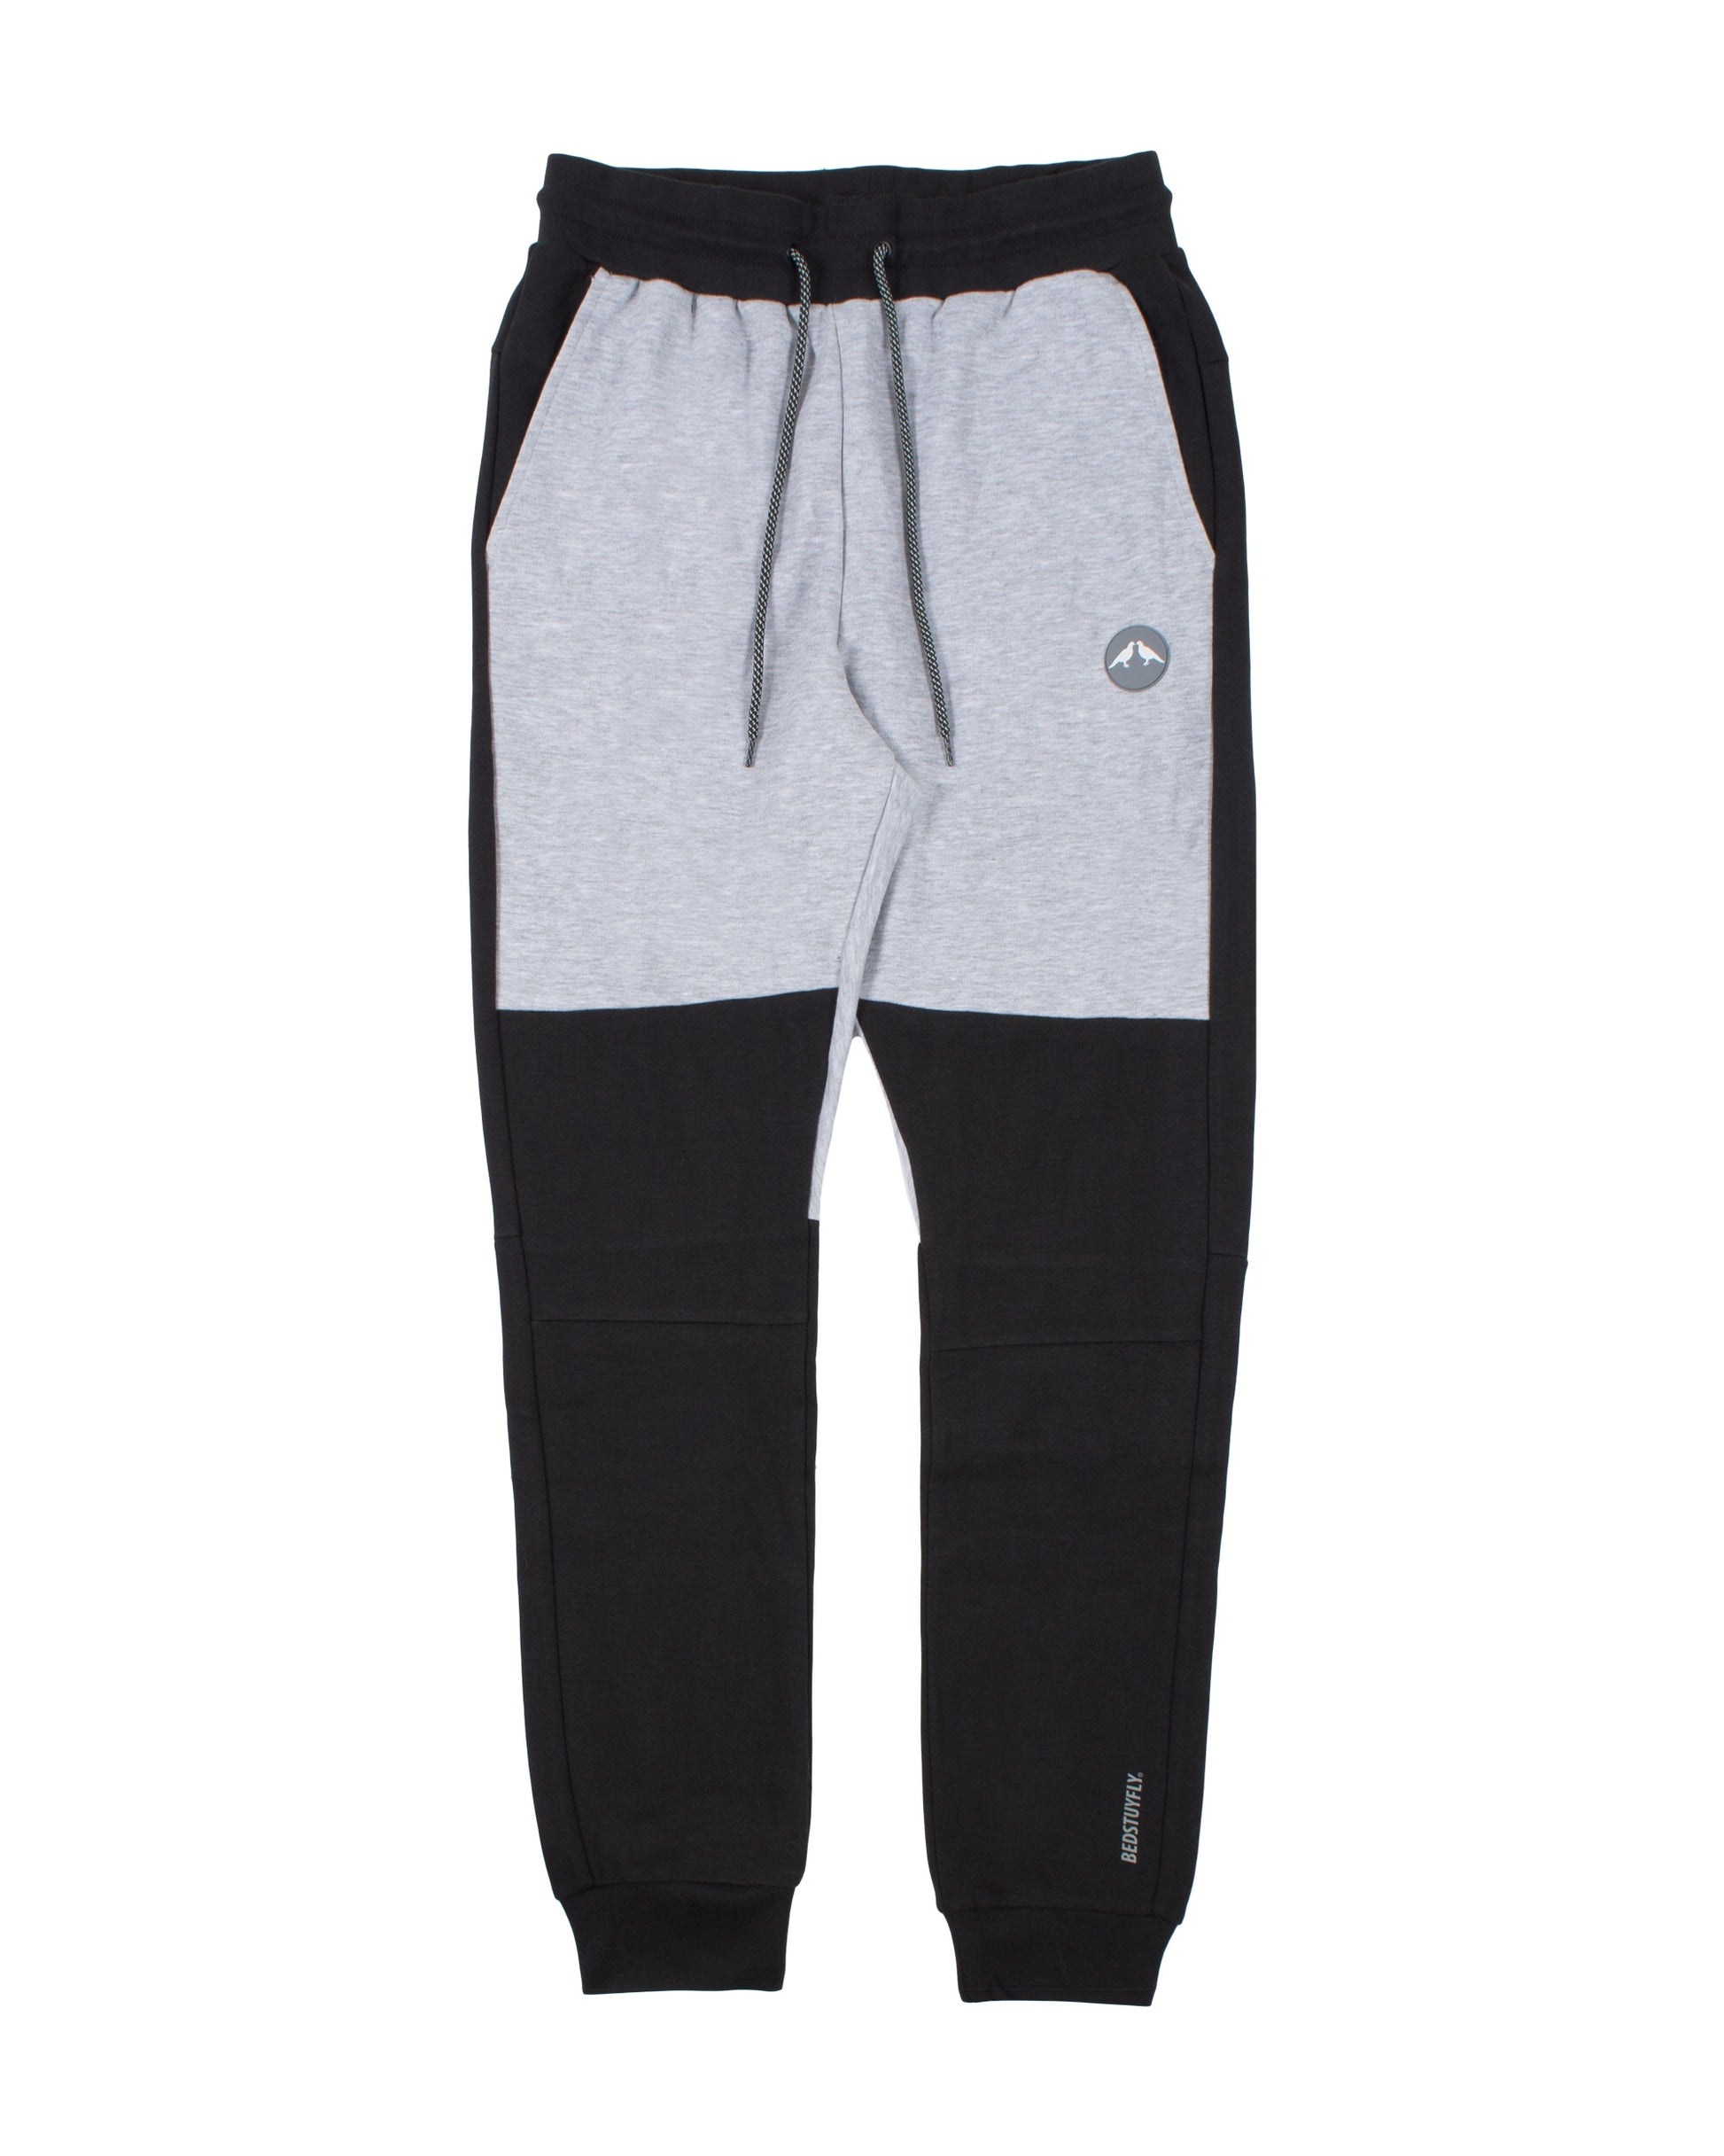 Geo Tech Sweatpants (Black/Gray) - Bedstuyfly